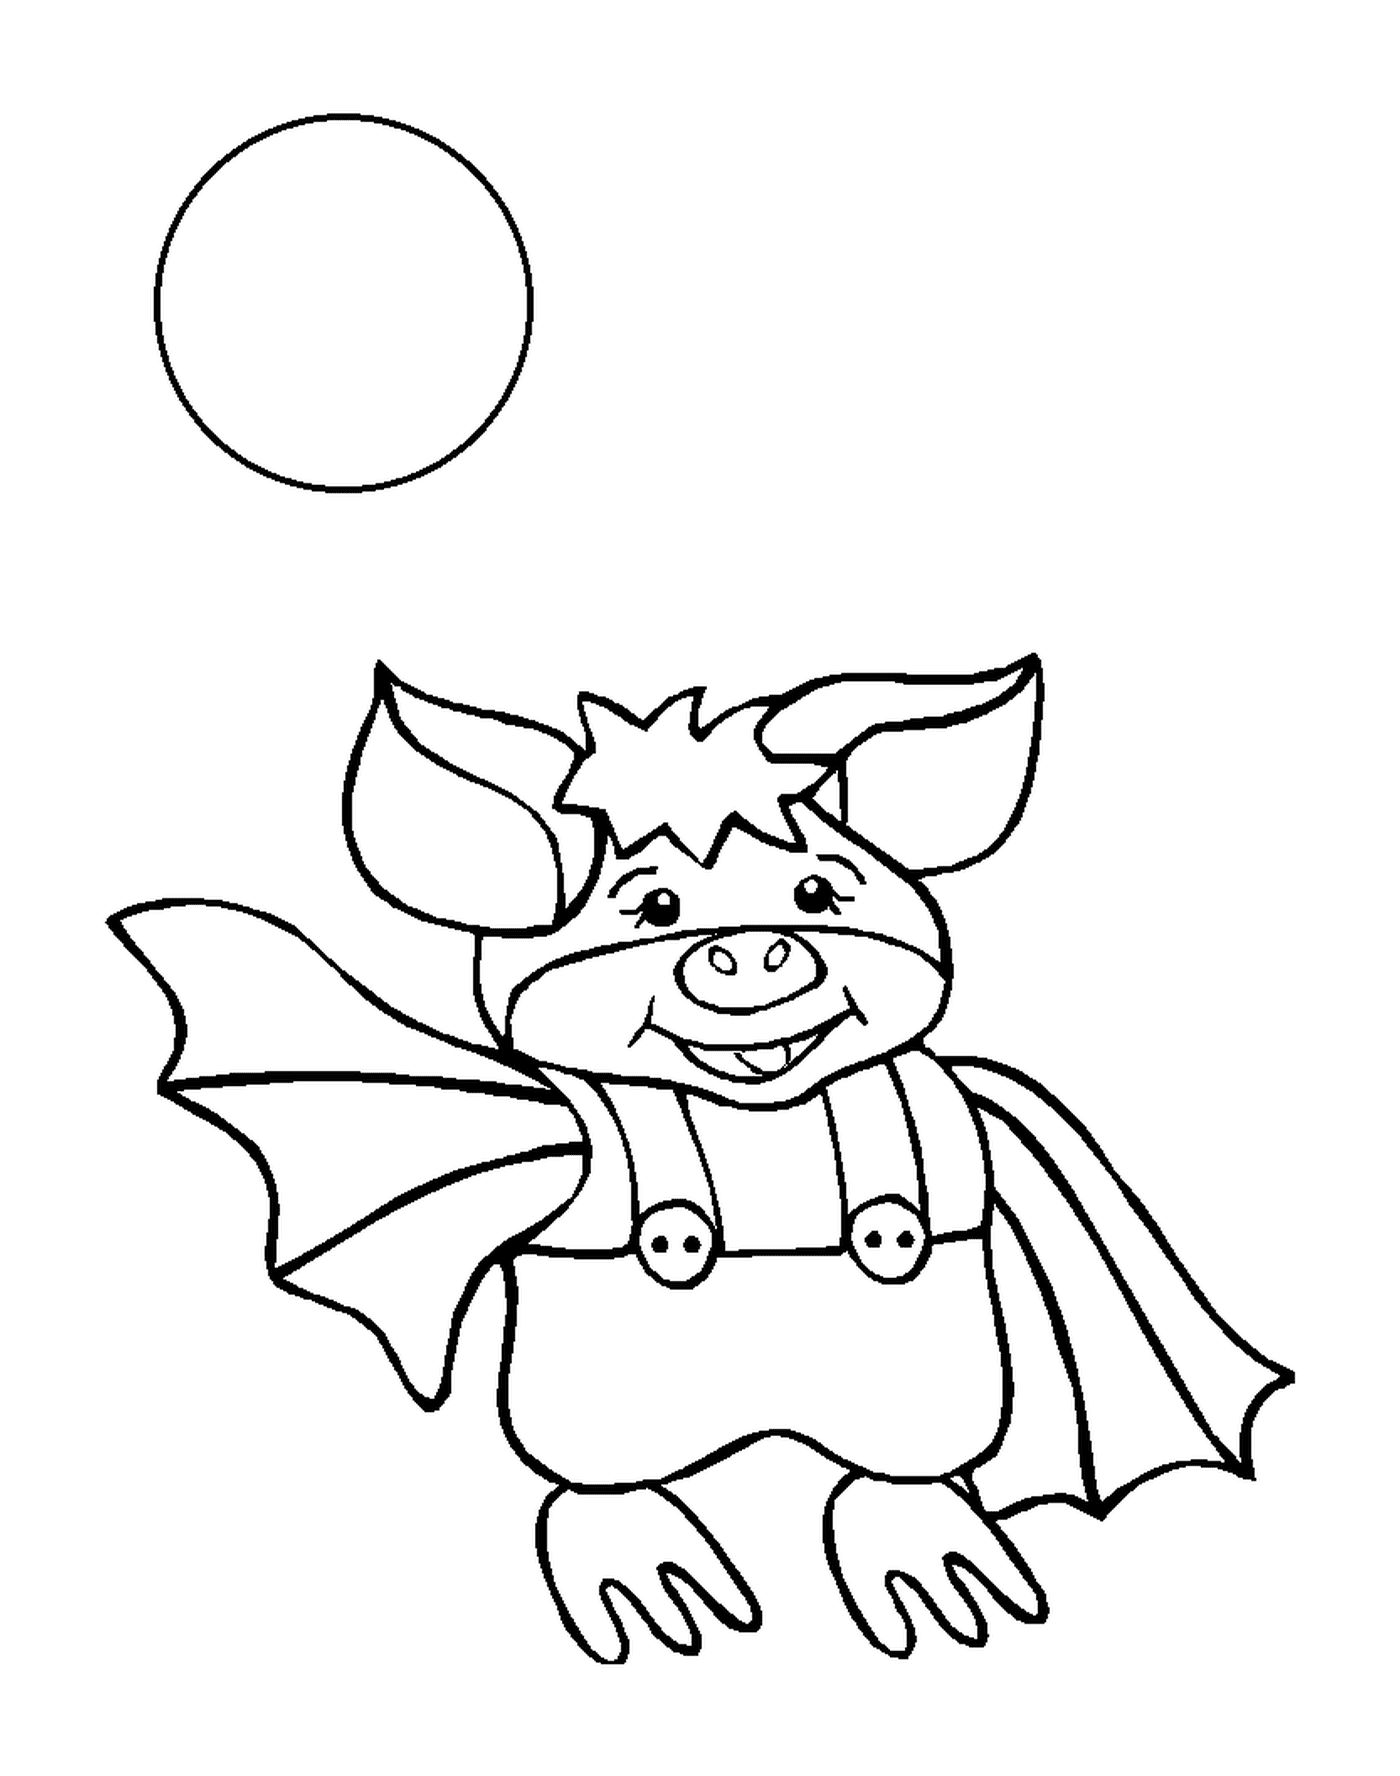  pig disguised as a bat 